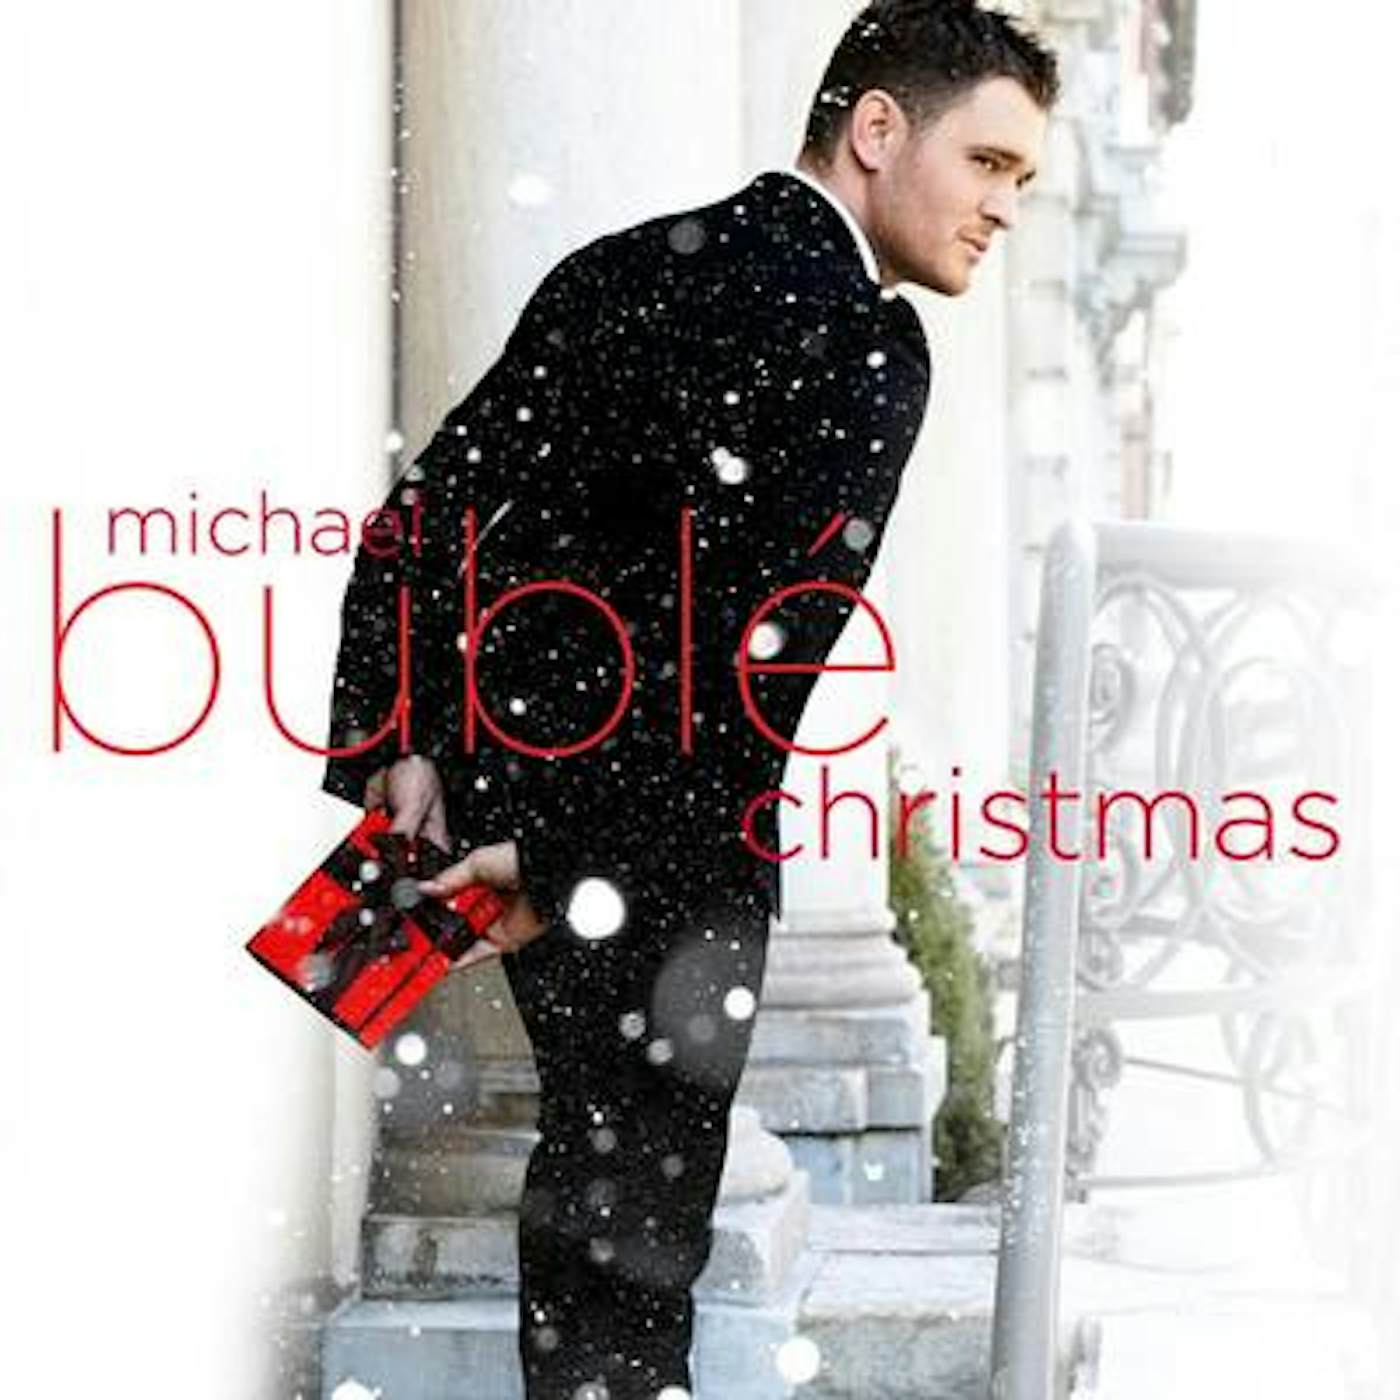 Michael Bublé Christmas Vinyl Record